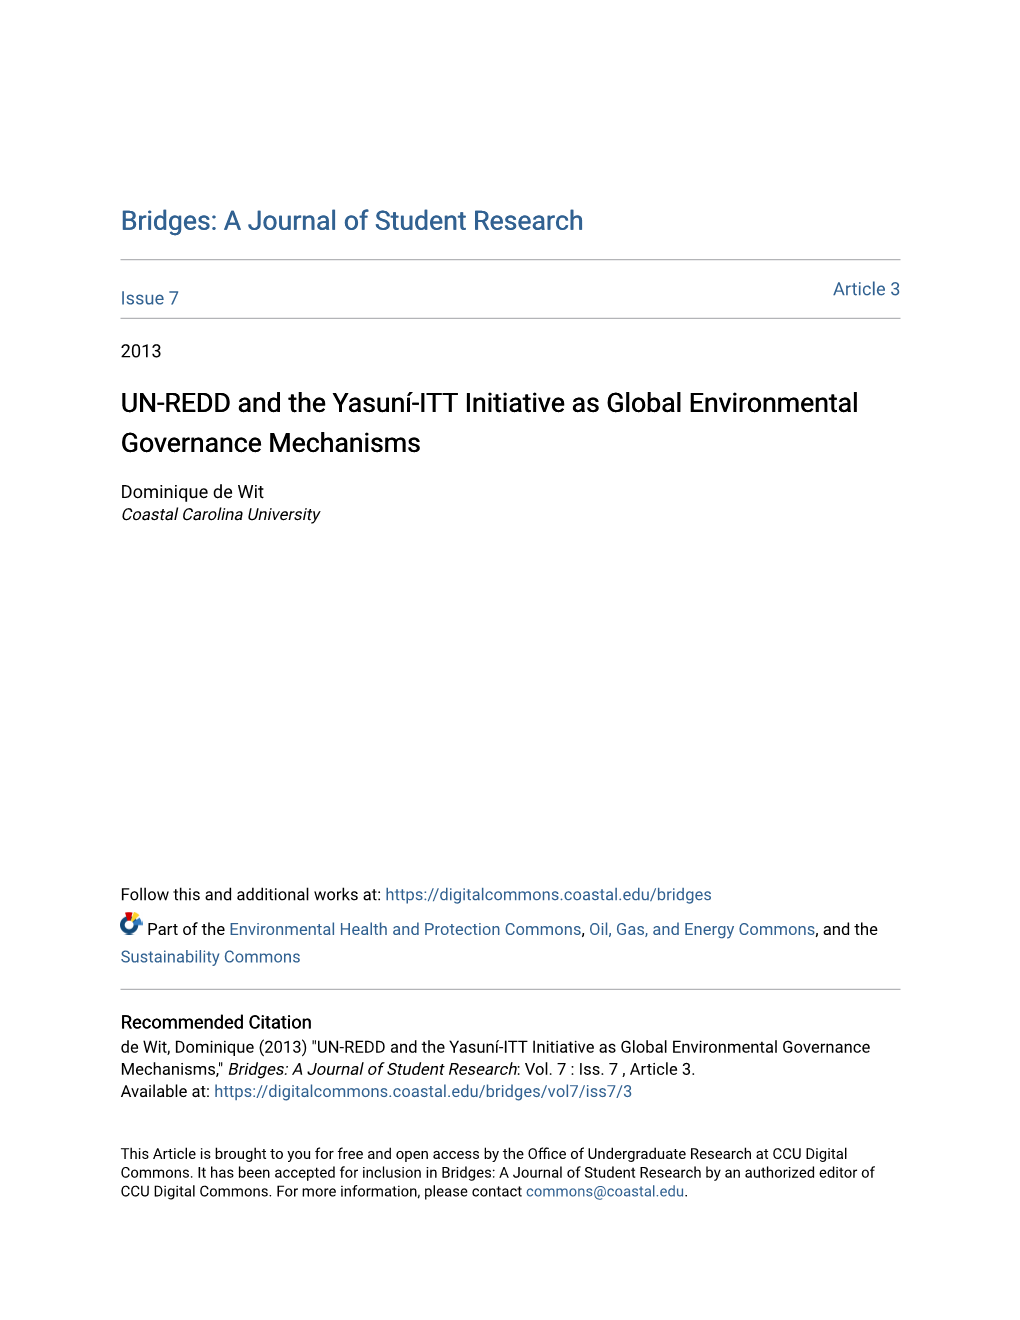 UN-REDD and the Yasunãł-ITT Initiative As Global Environmental